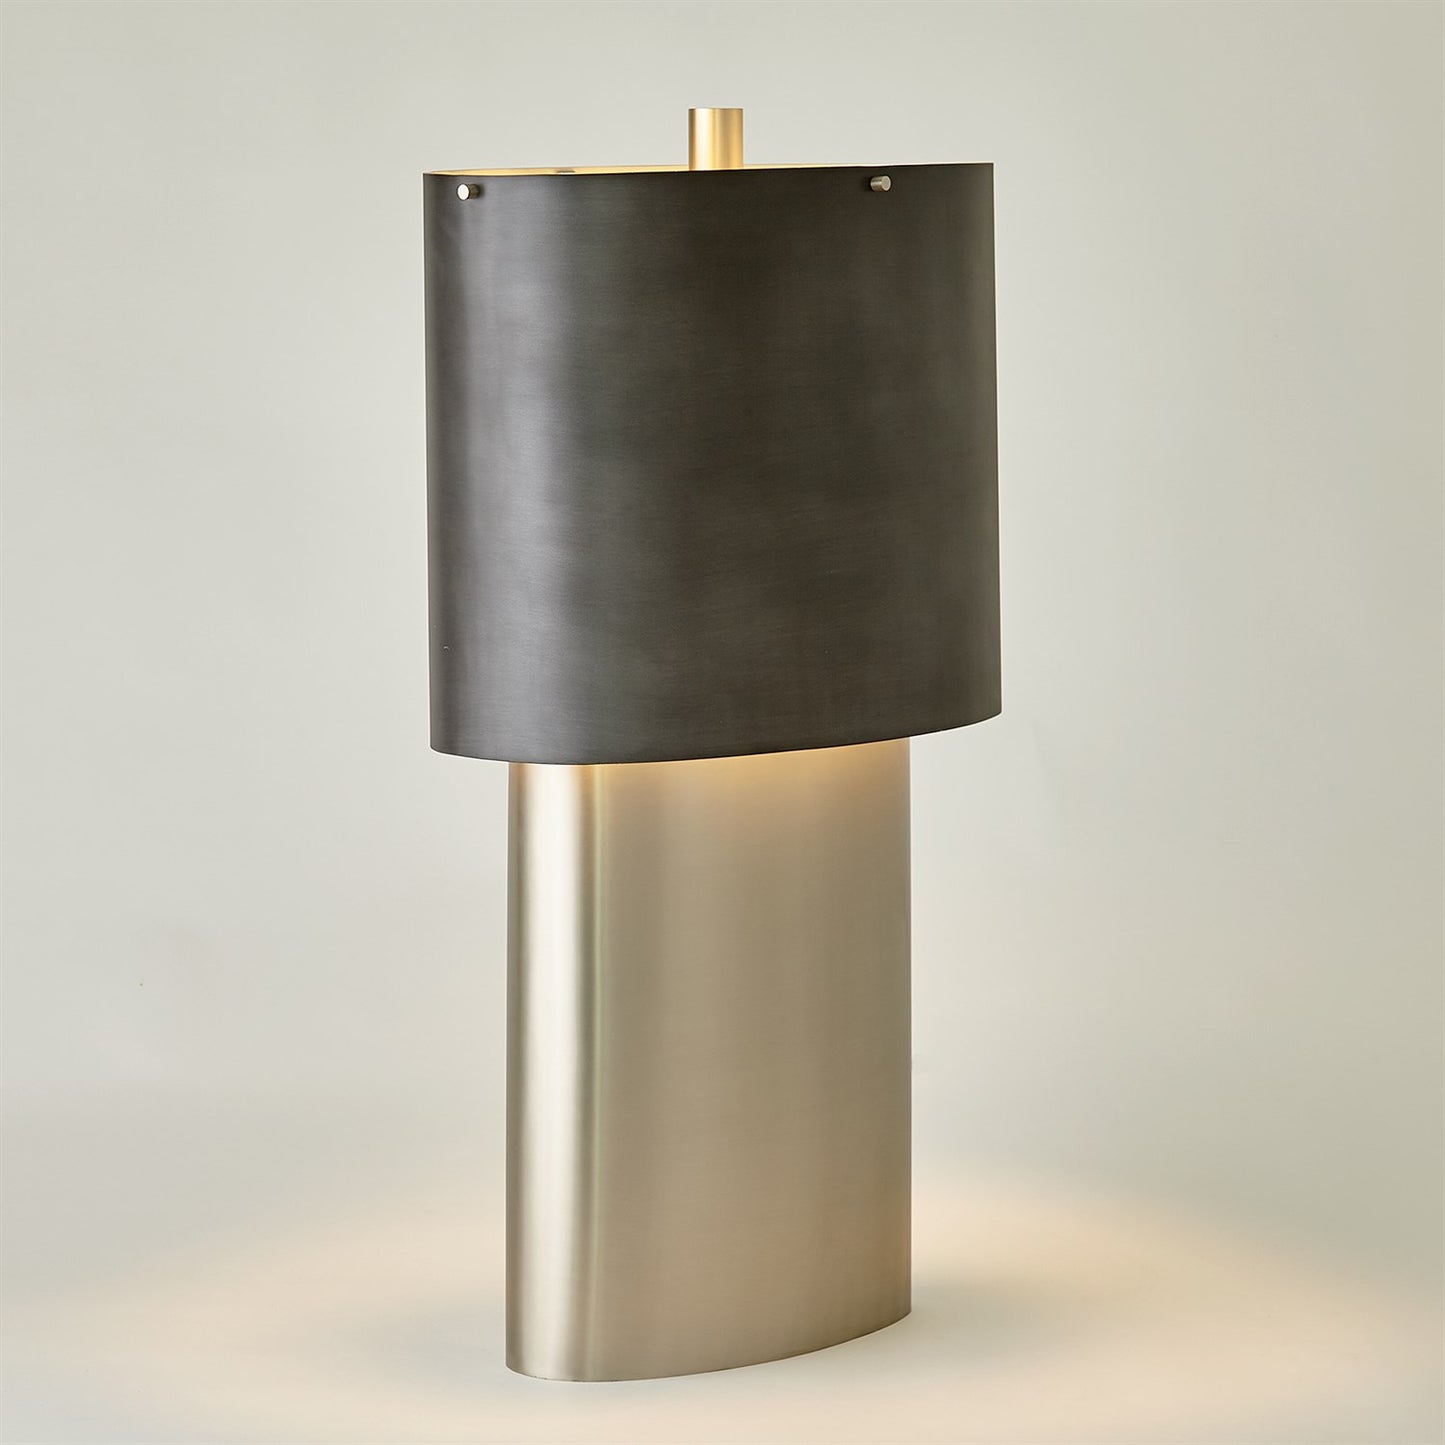 NORDIC TABLE LAMP-ANTIQUE NICKEL